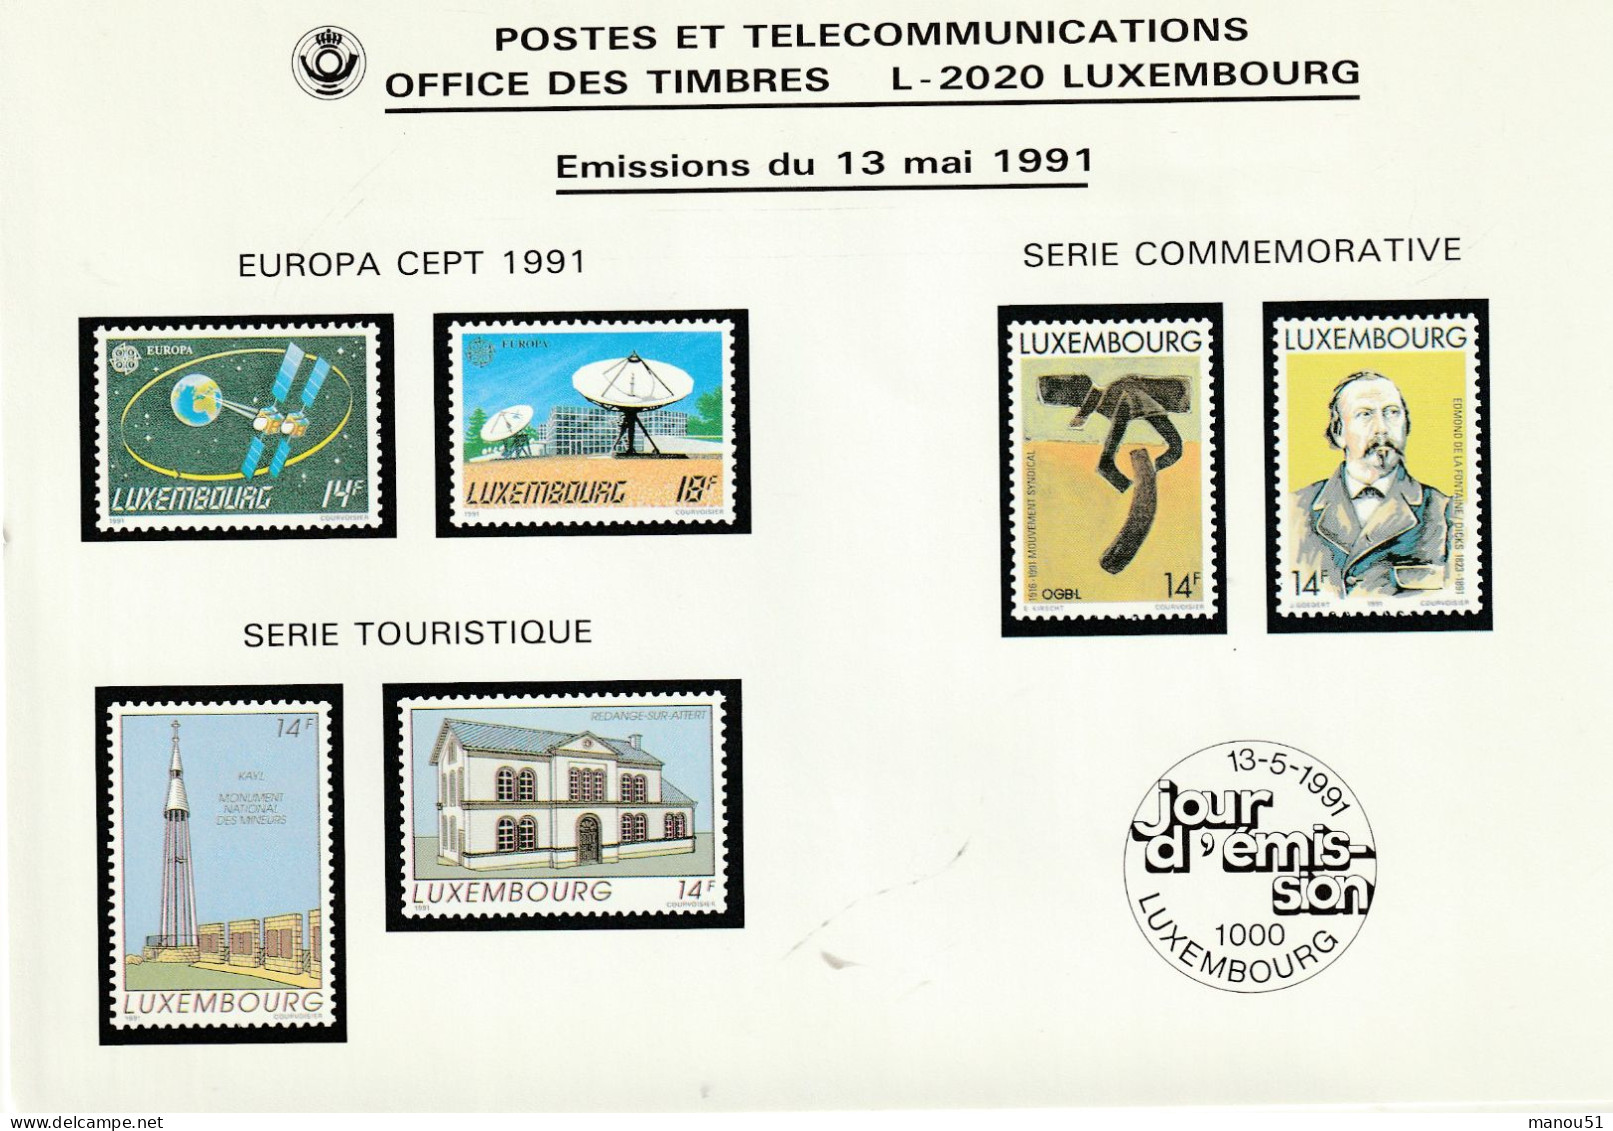 LUXEMBOURG - Emission Du 13.05.1991 - Lot 6 Timbres + 3 Enveloppes 1er Jour - Nuovi